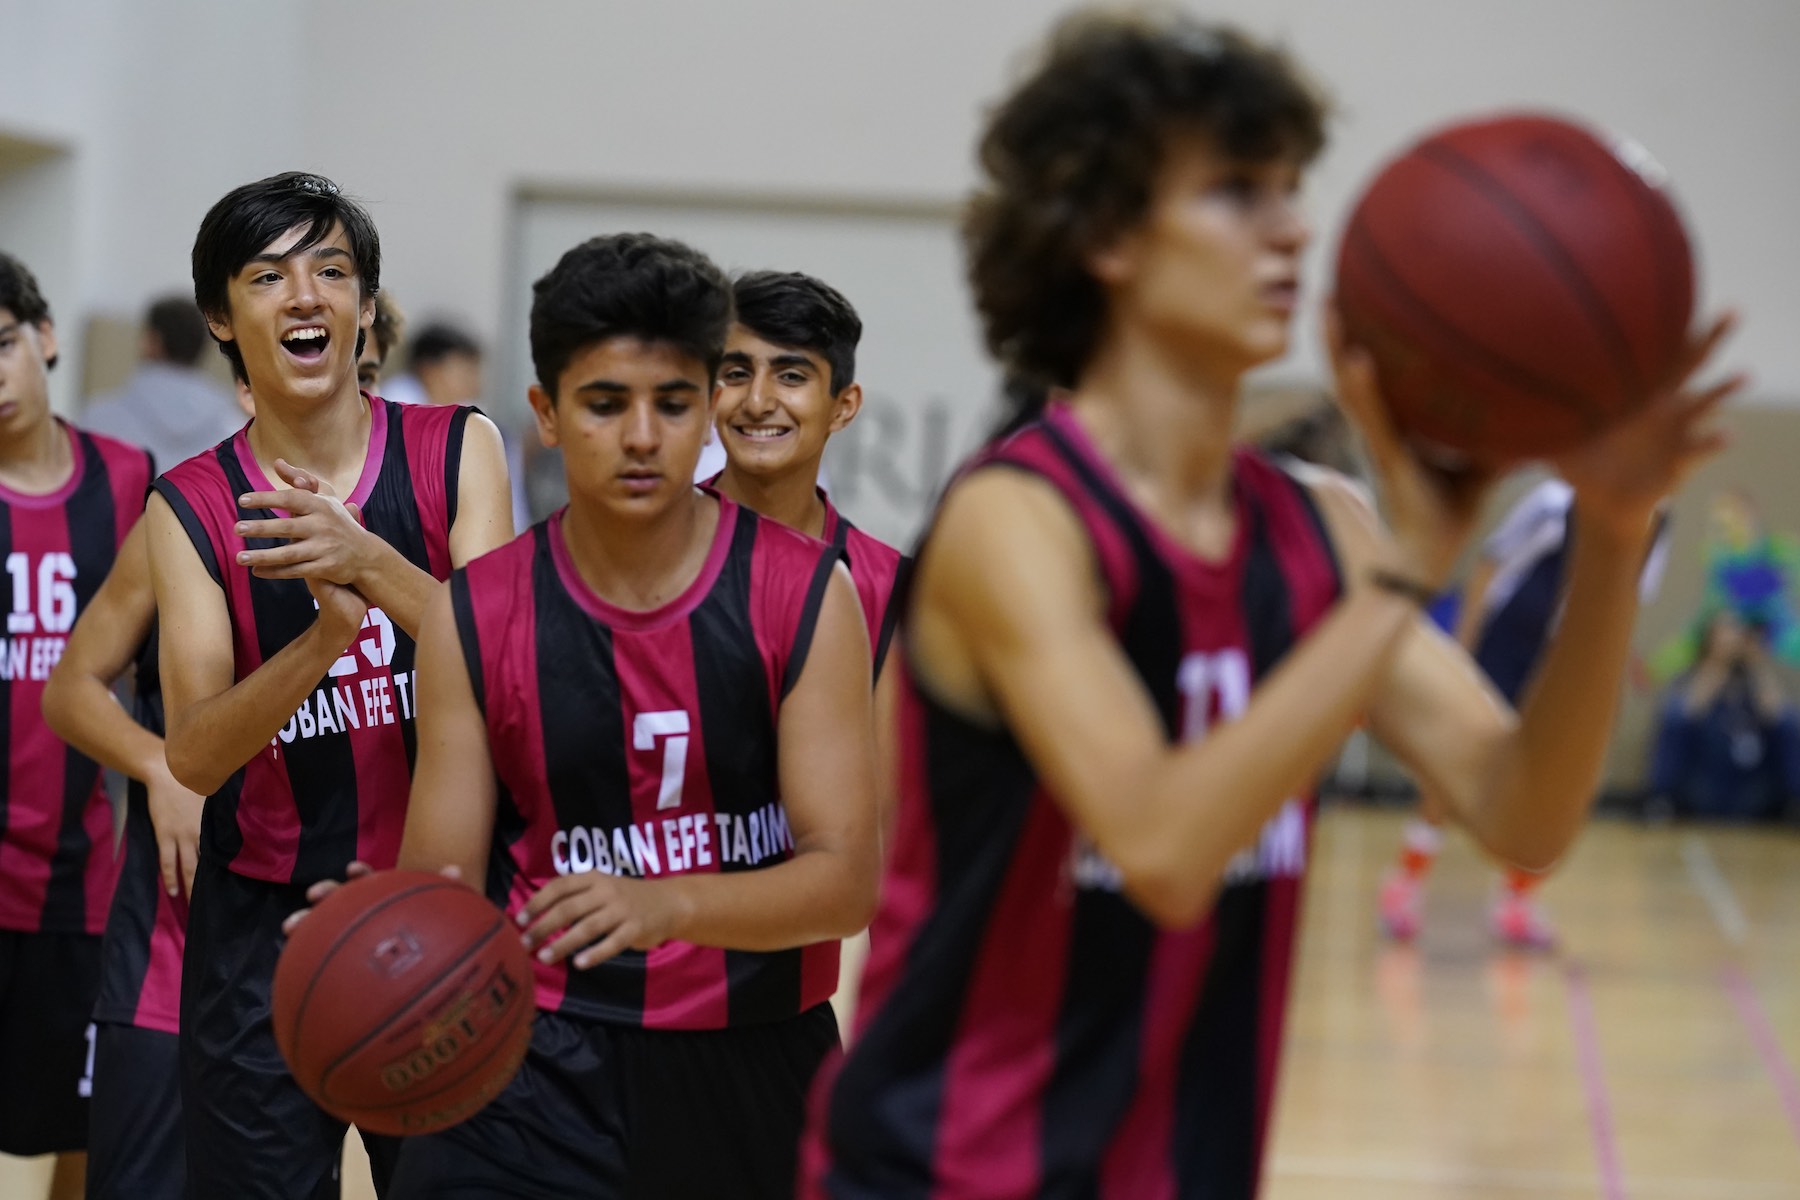 Youth Basketball, Turkey